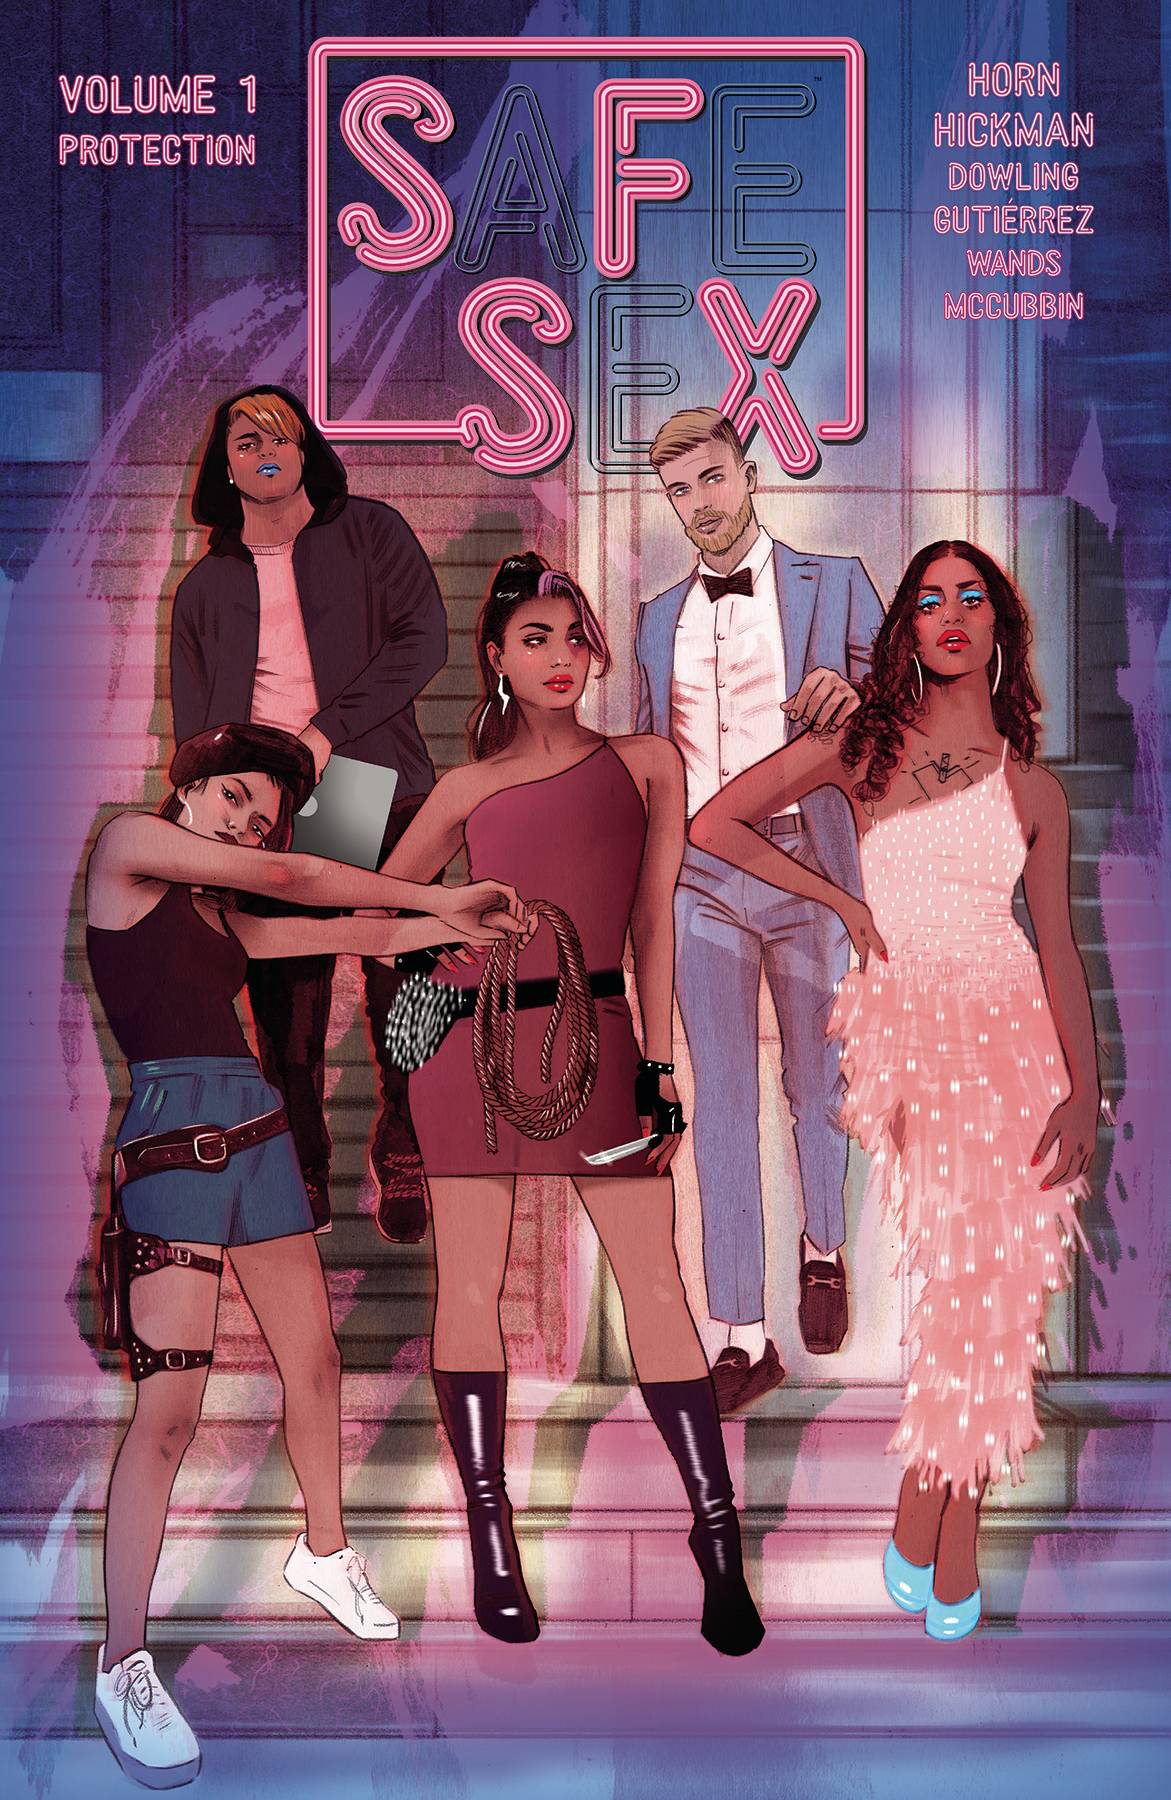 SFSX (Safe Sex) (2019) Volume 1: Protection